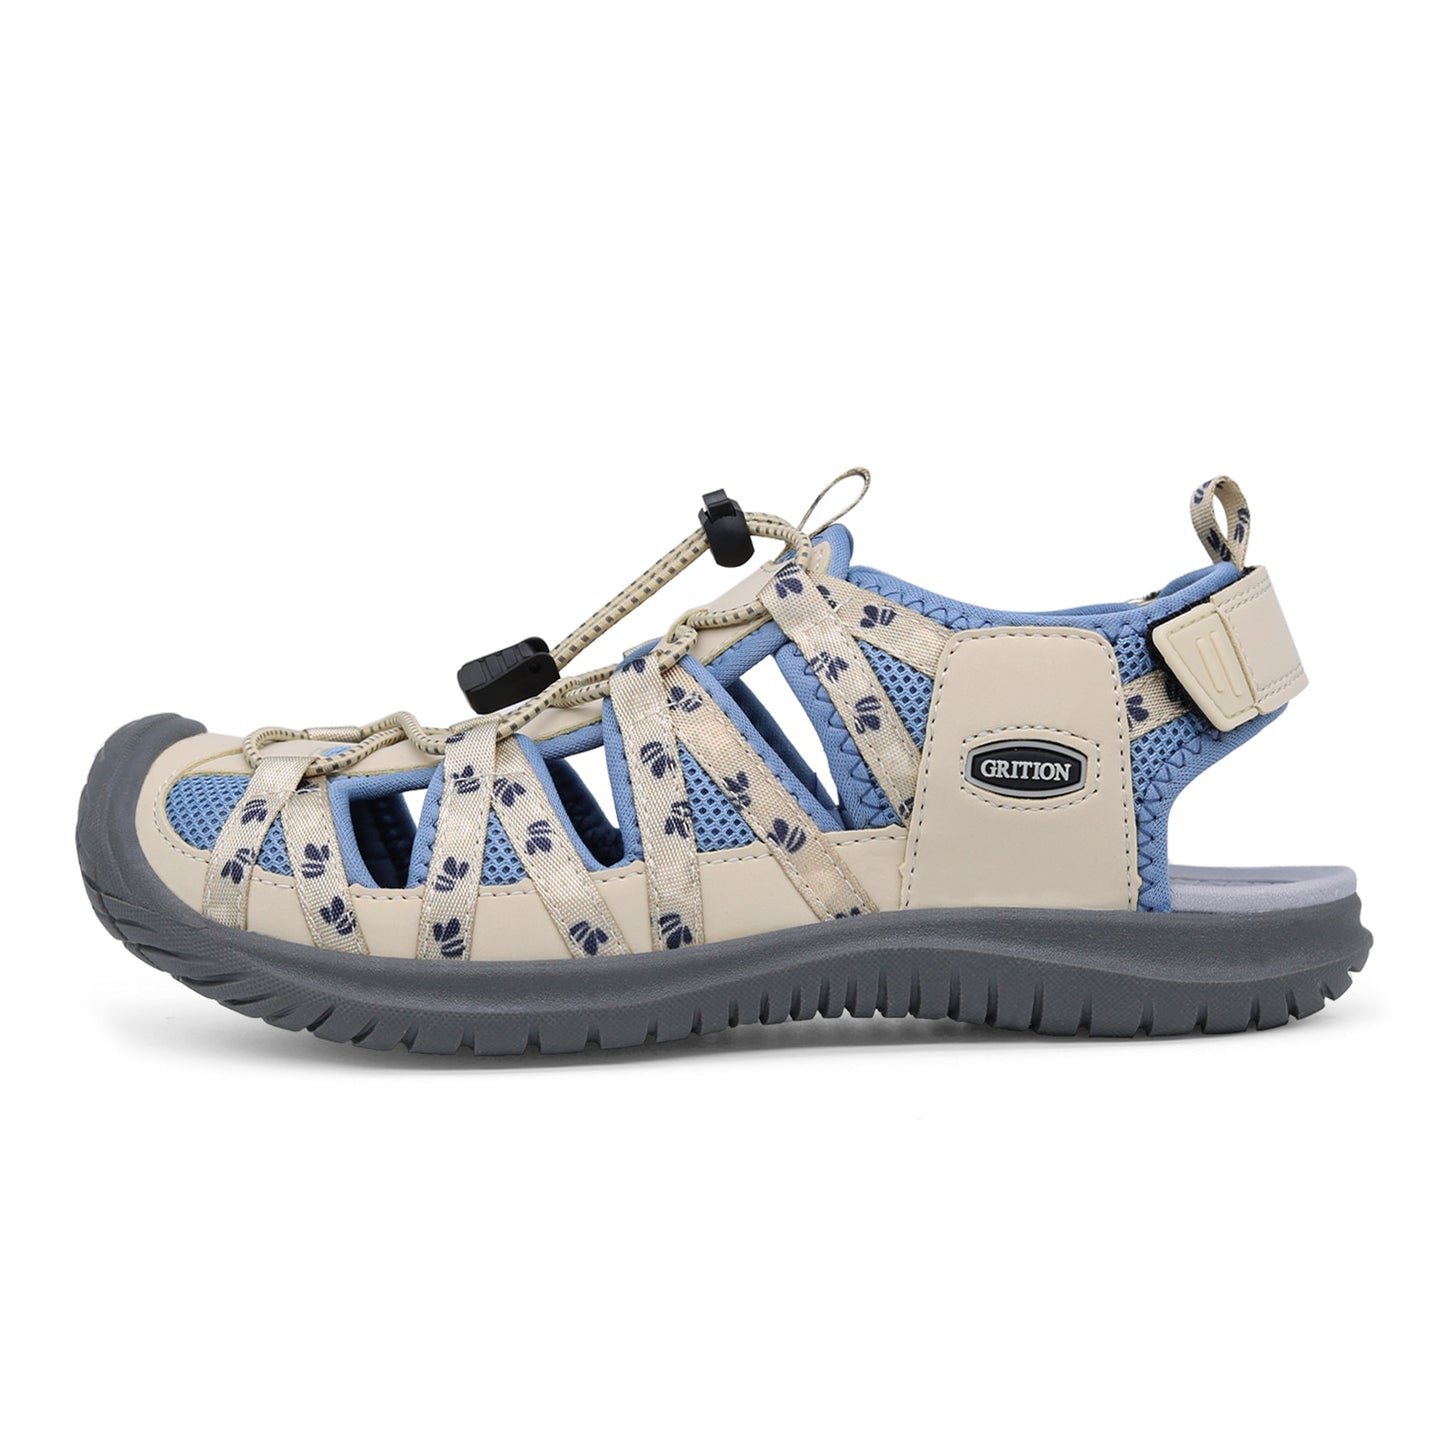 GRITION Women Sandals Non-Slip Breathable Summer/Outdoor Trekking Shoes Flats Sport